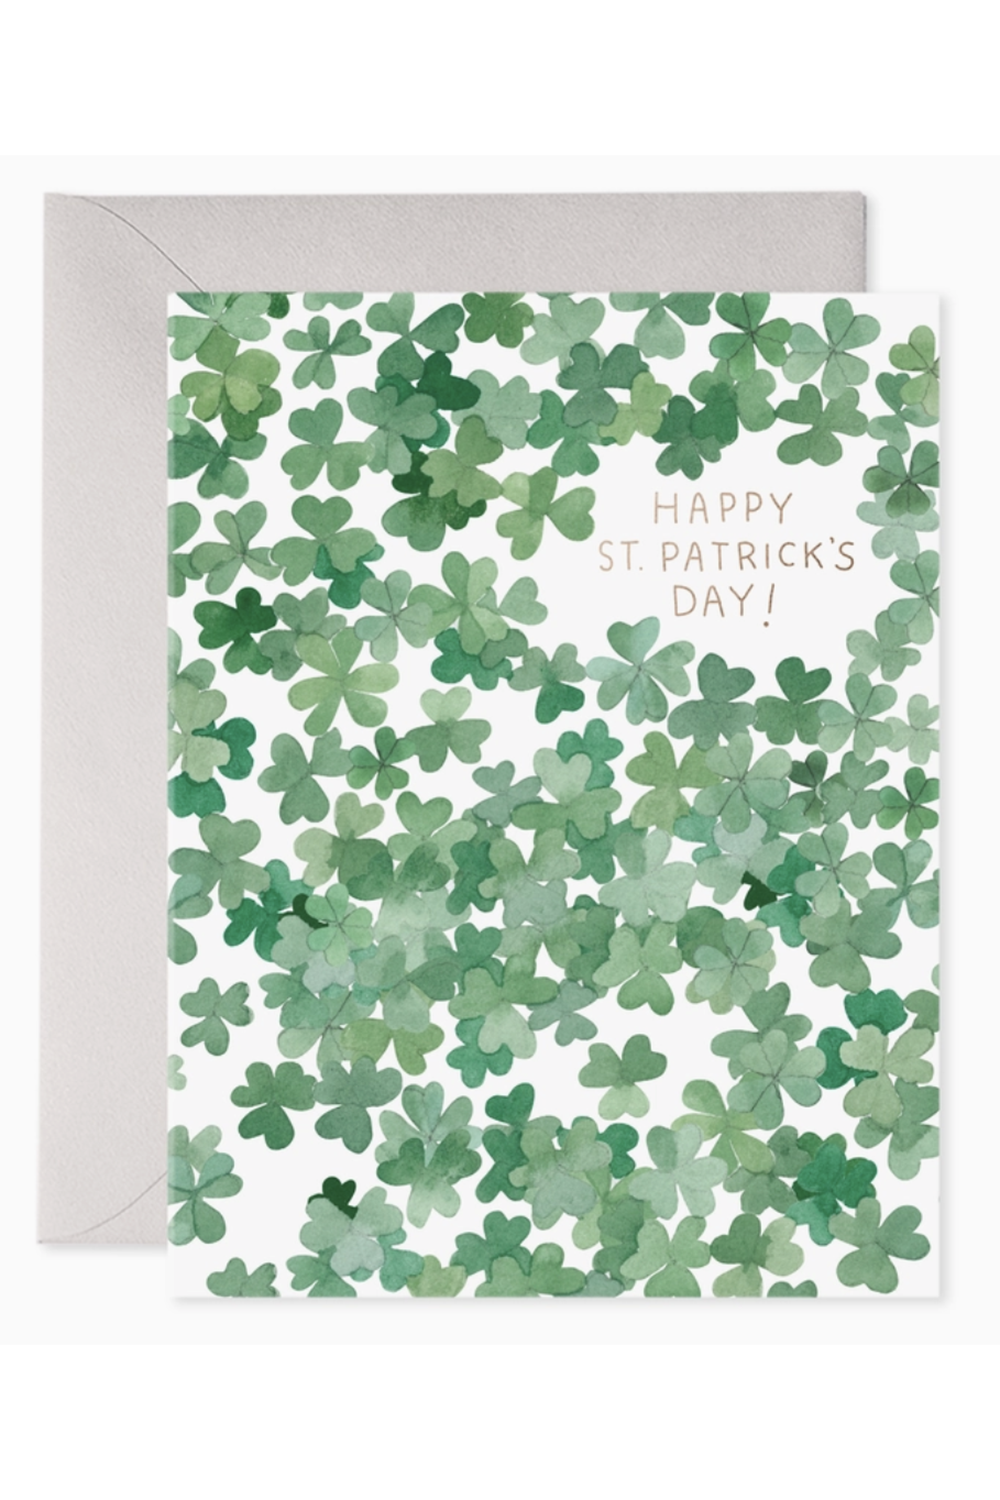 EFRAN St. Patrick's Day Greeting Card - Shamrocks